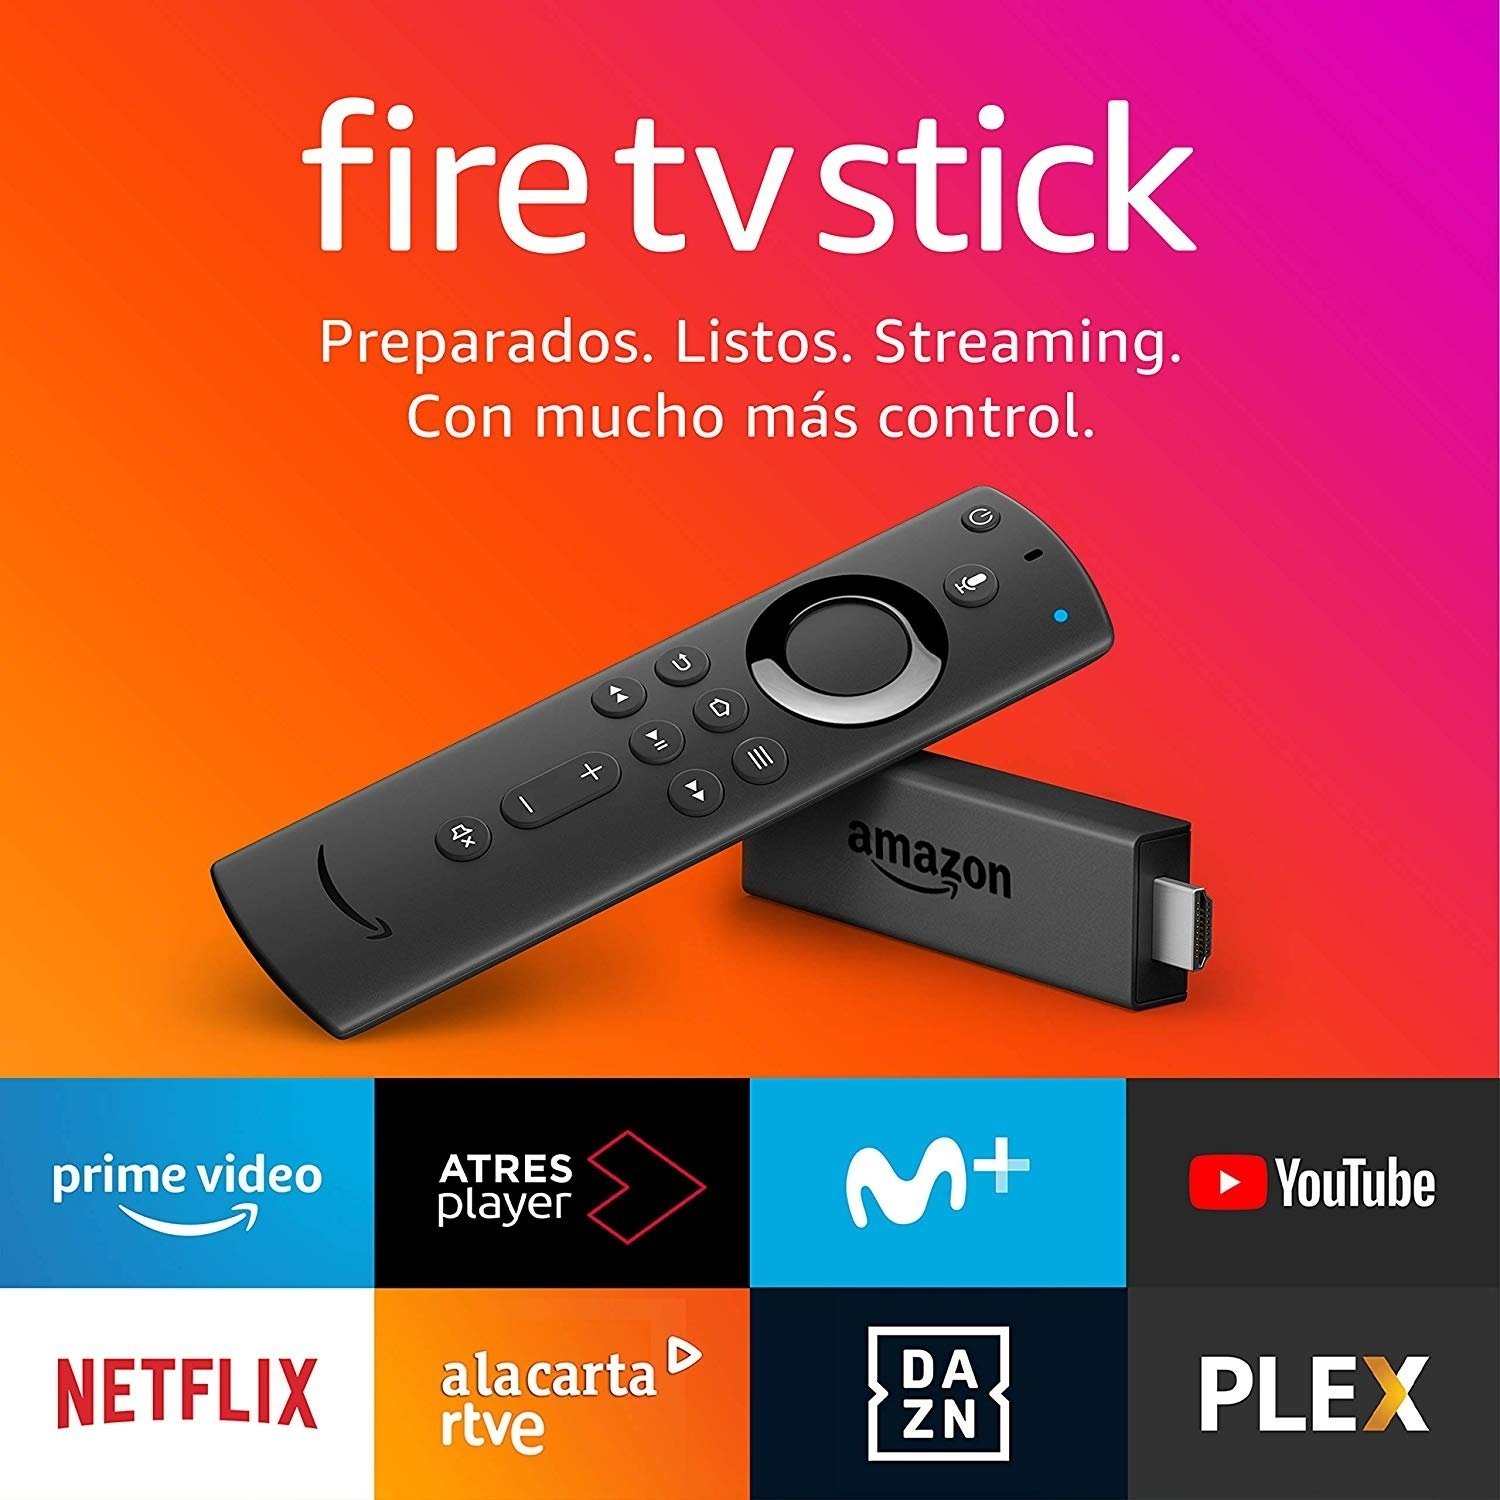 Amazon lanza en oferta dos nuevos modelos de Fire Stick TV